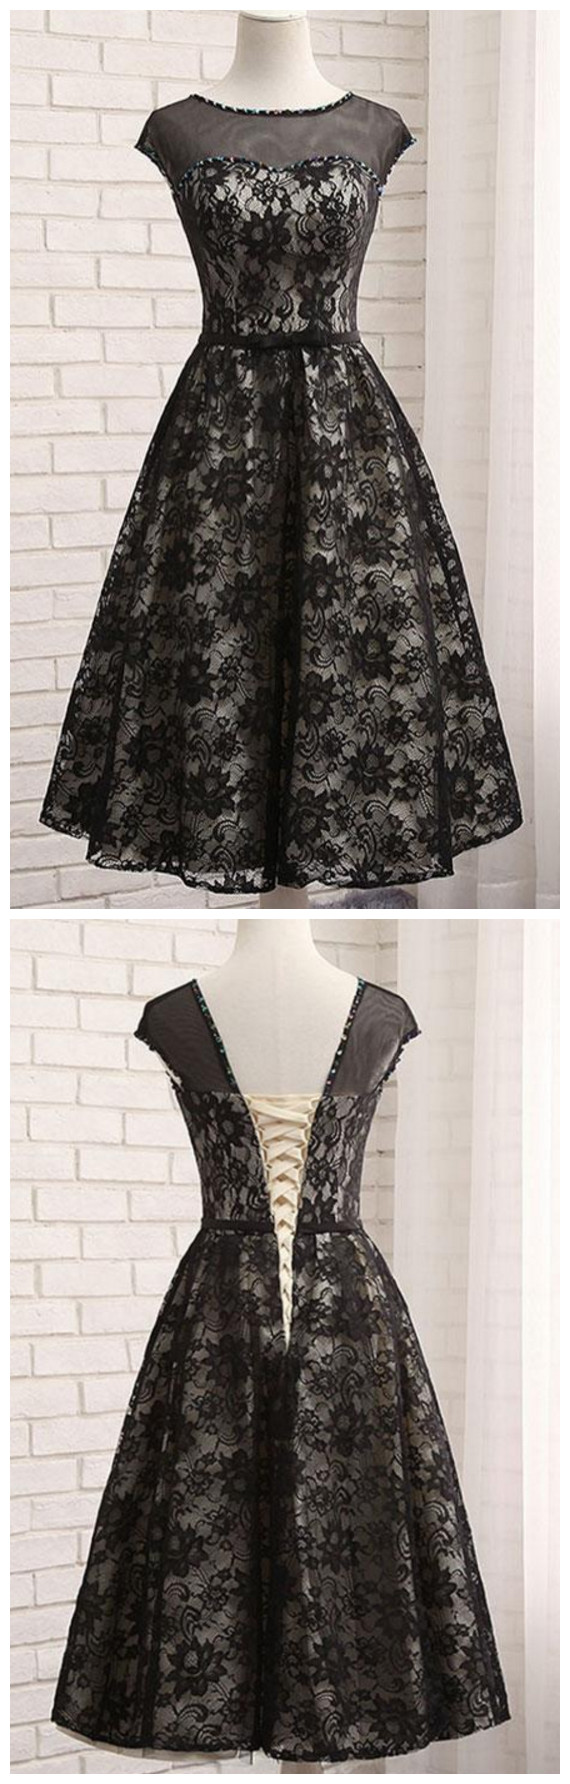 Black Lace Tea Length Prom Dress, Black Evening Dress